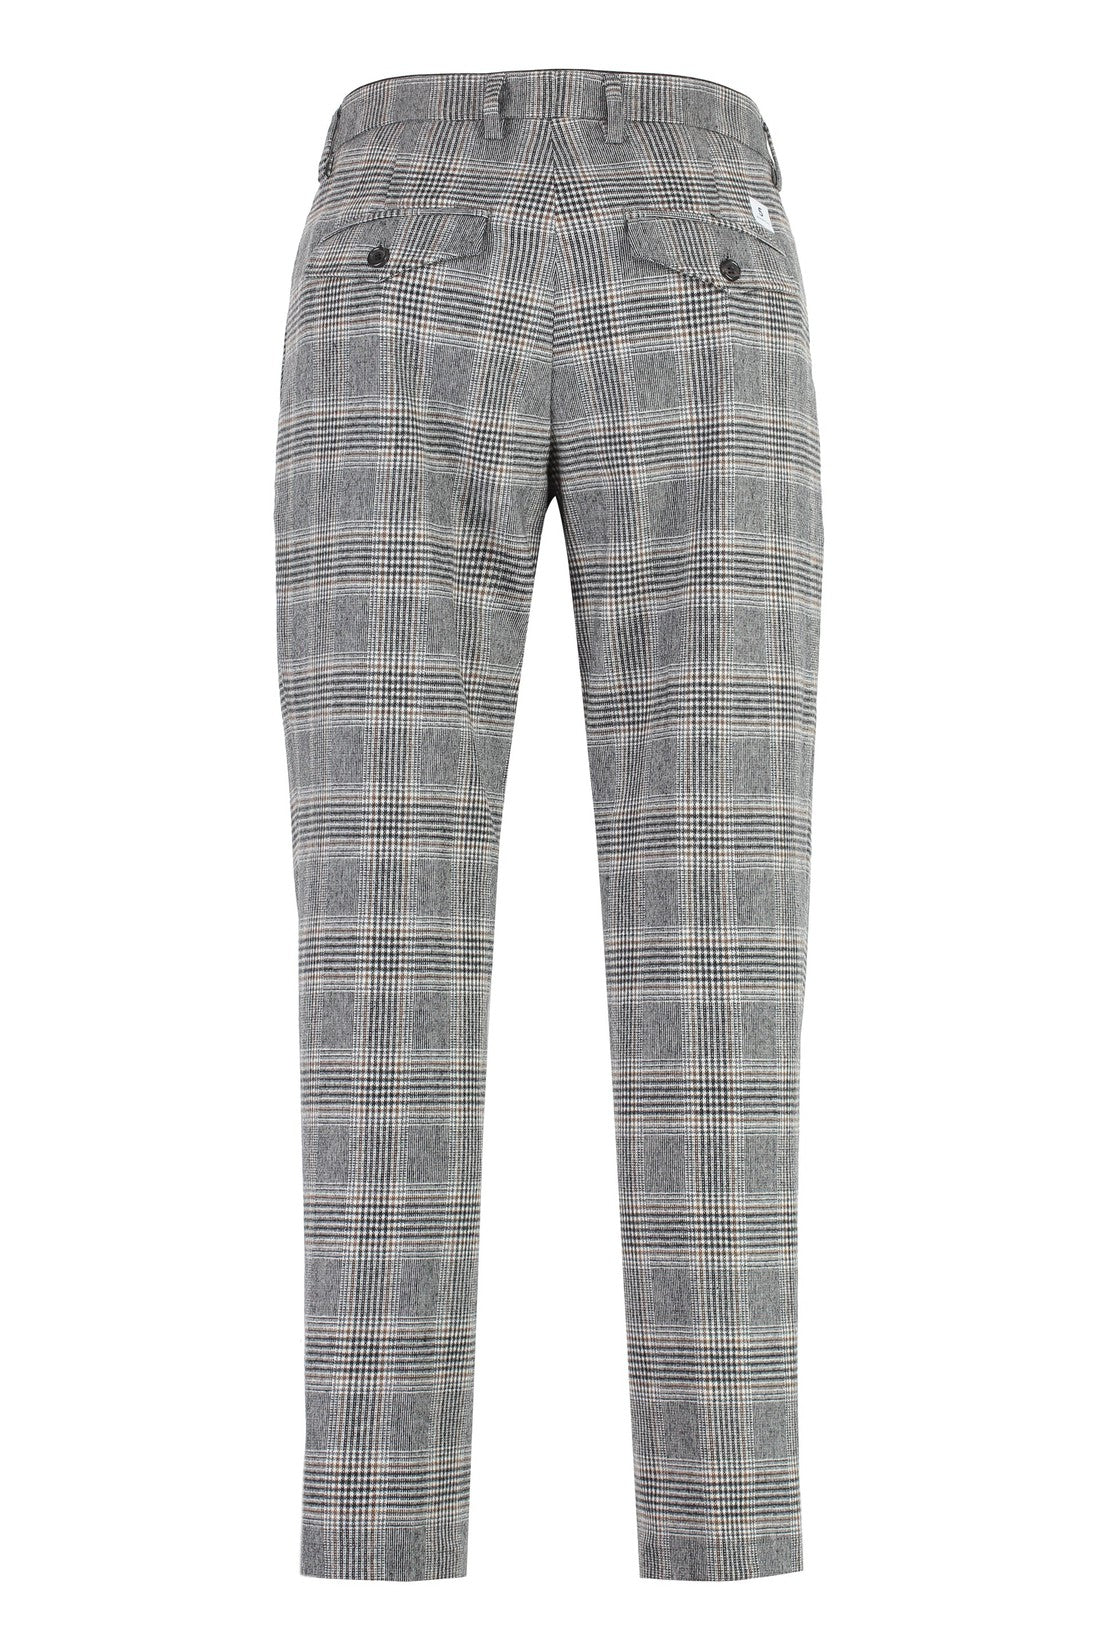 Setter-Chino-pants-in-wool-blend-Department-5-designer-outlet-archivist-2.jpg